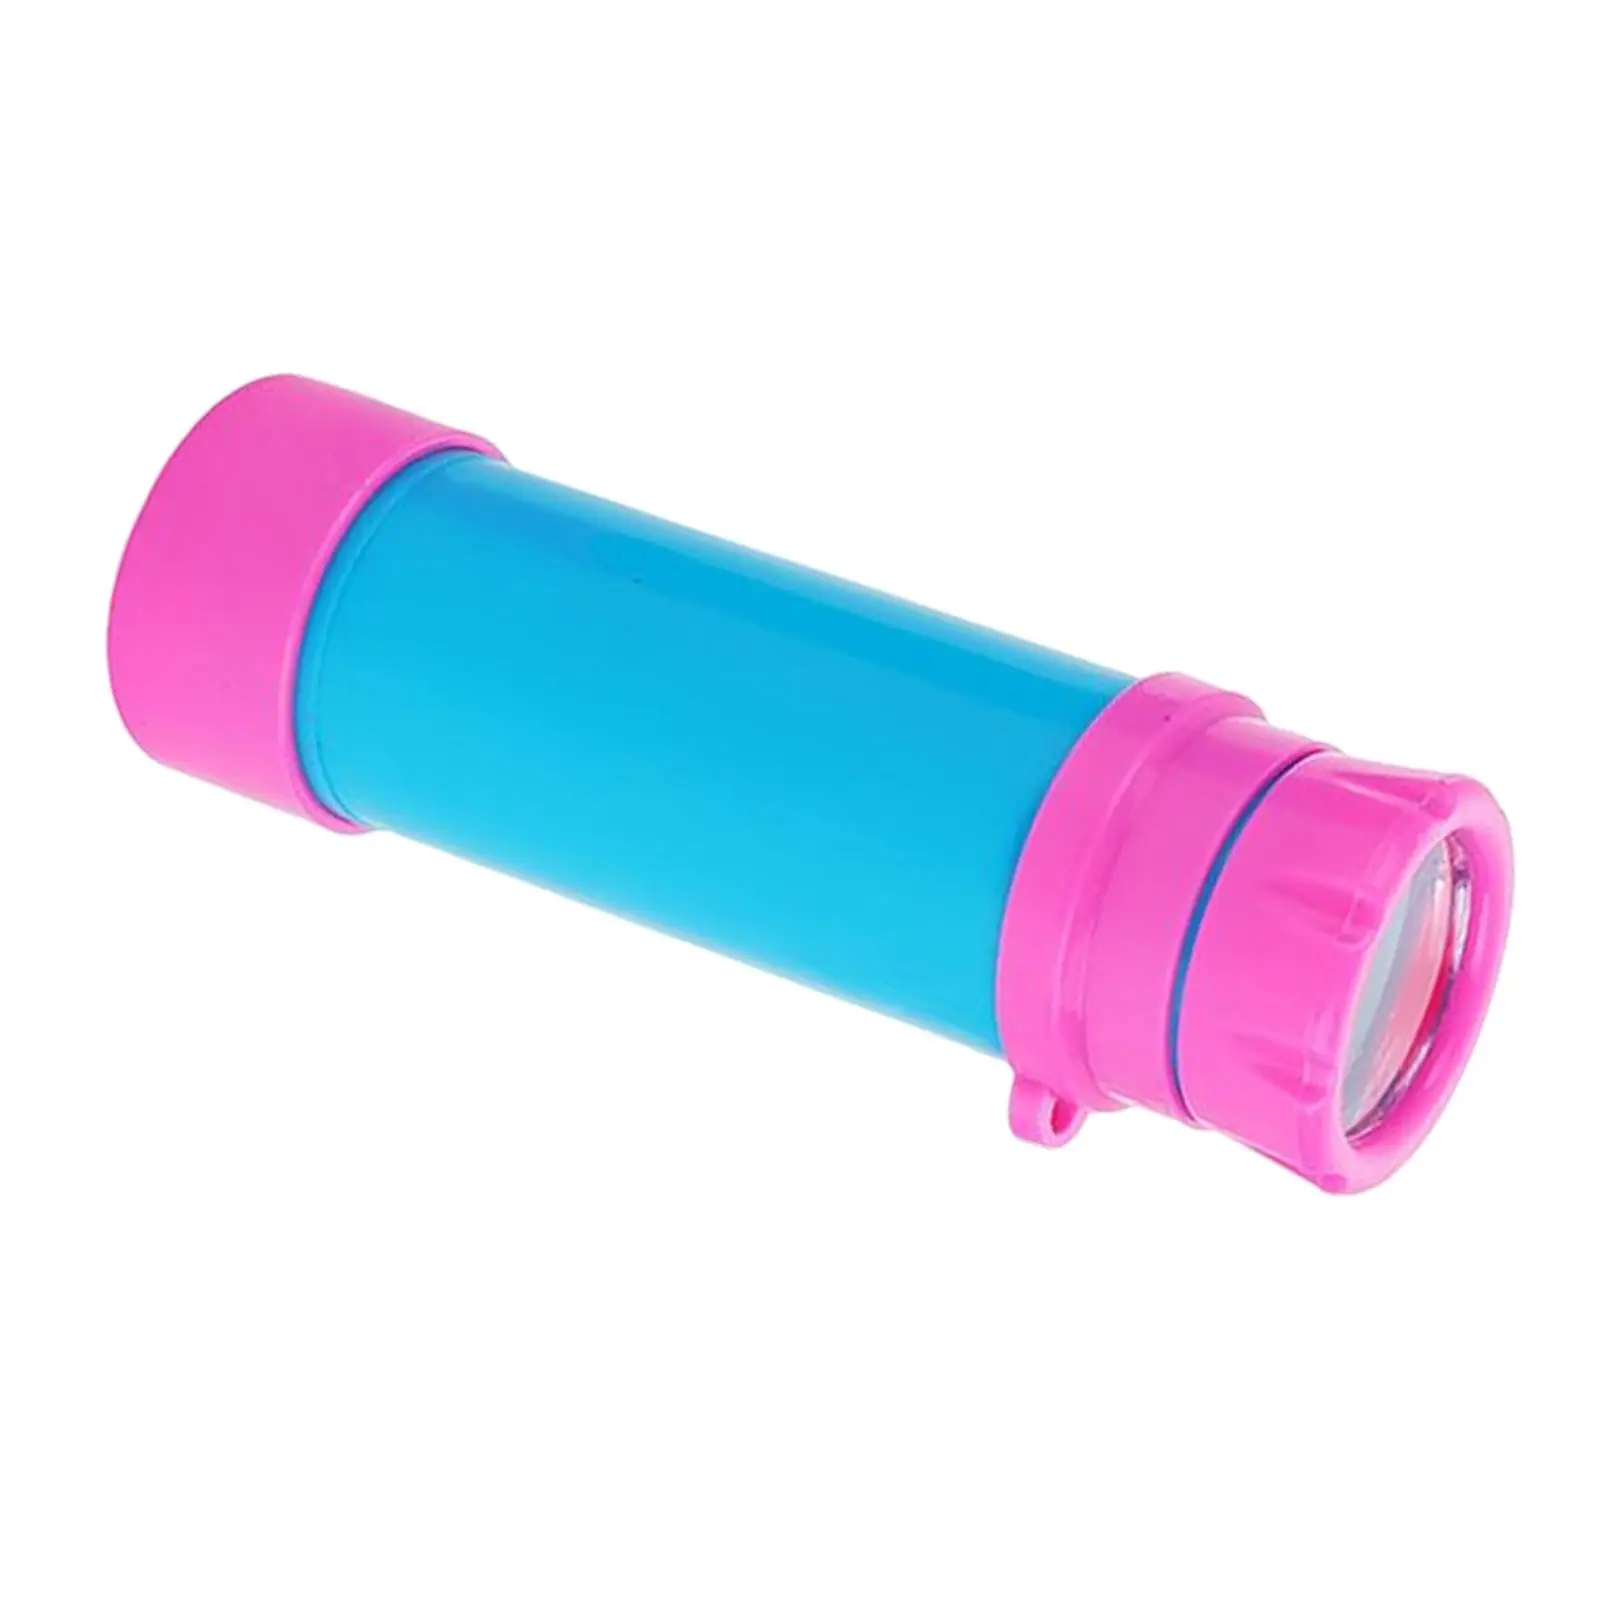 Portable Kids Binoculars Toy Science Toys Educational Retractable Handheld Pocket Telescope for Boys Girls Kids